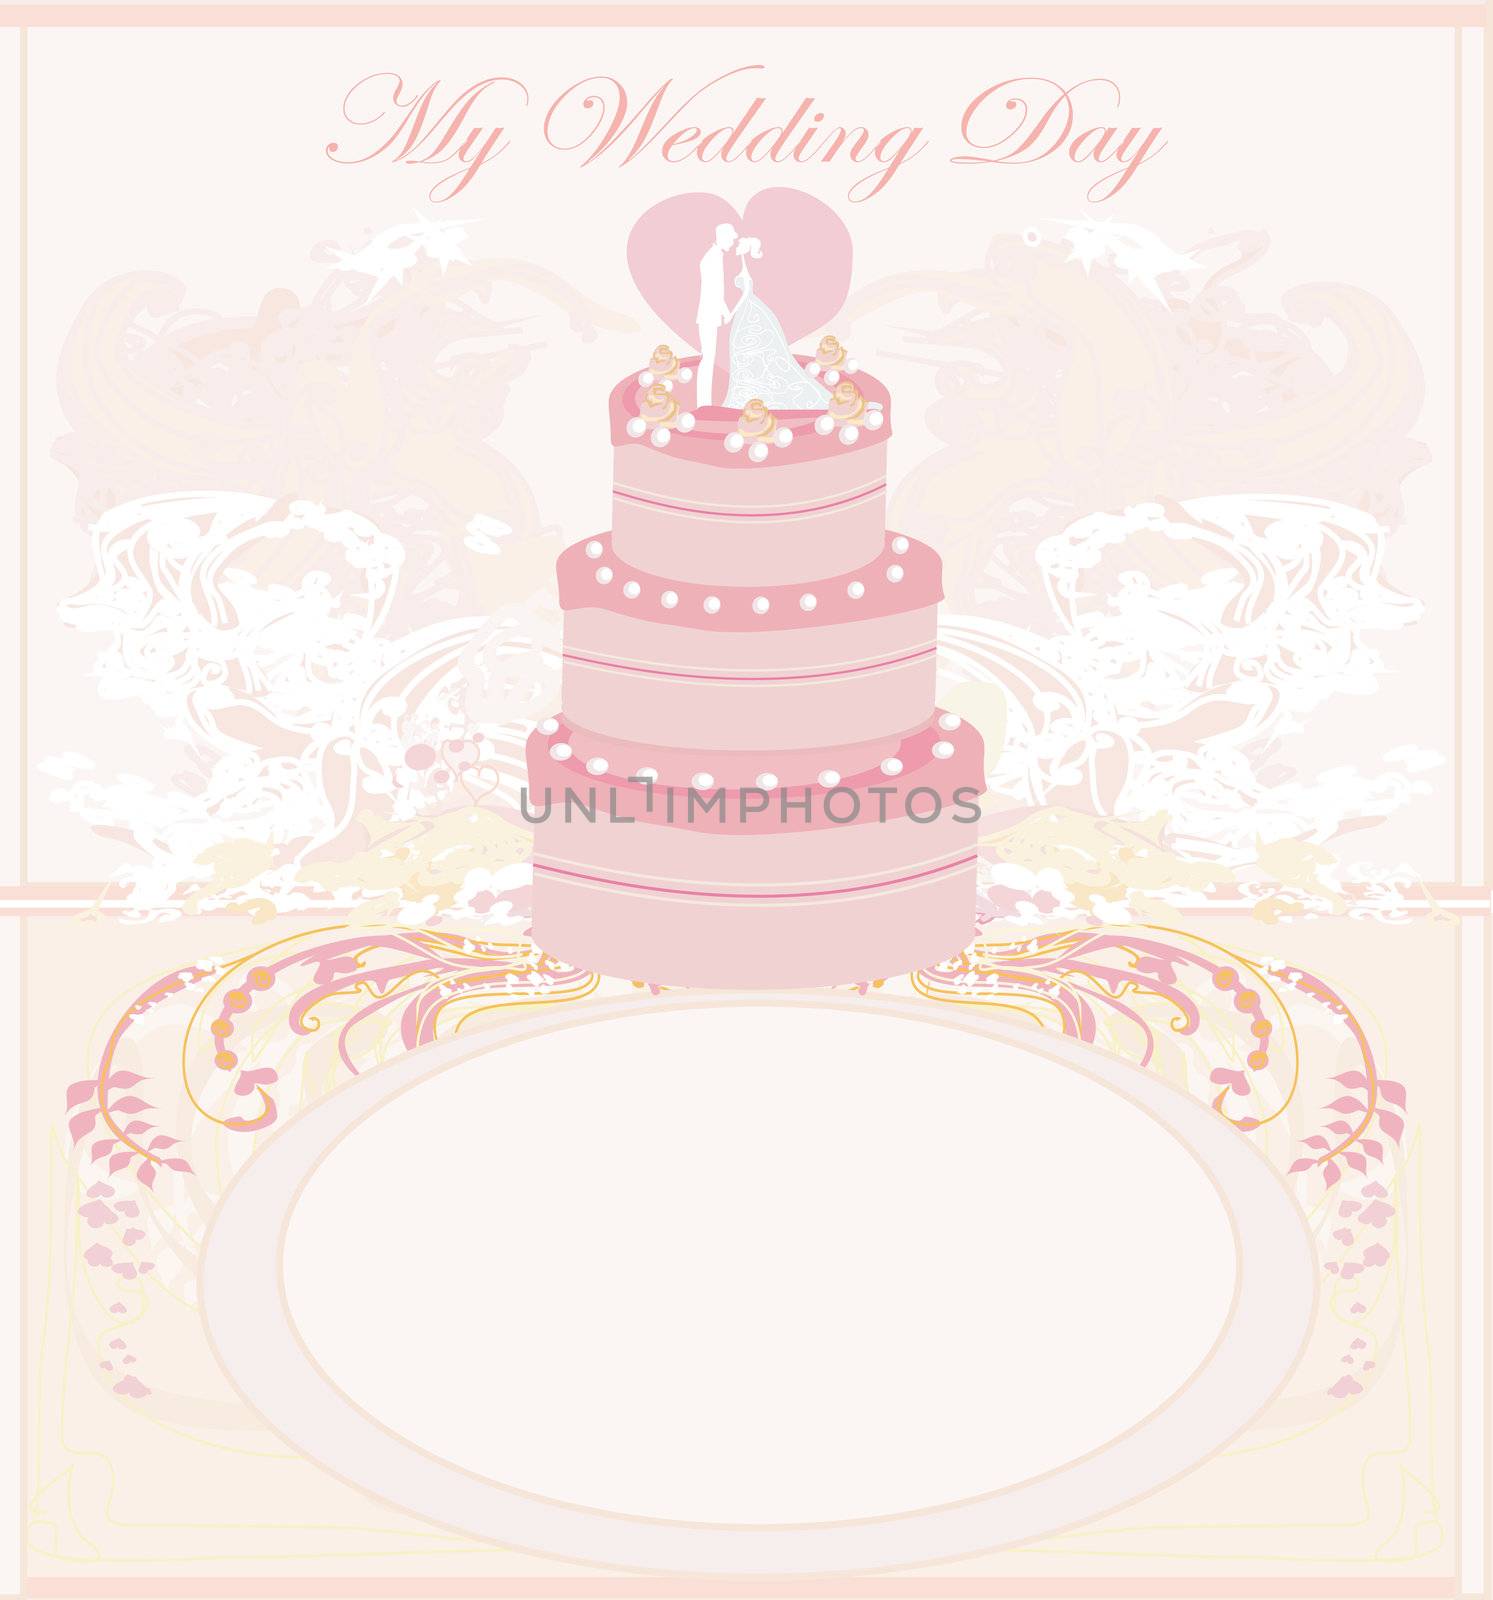 wedding cake card design by JackyBrown